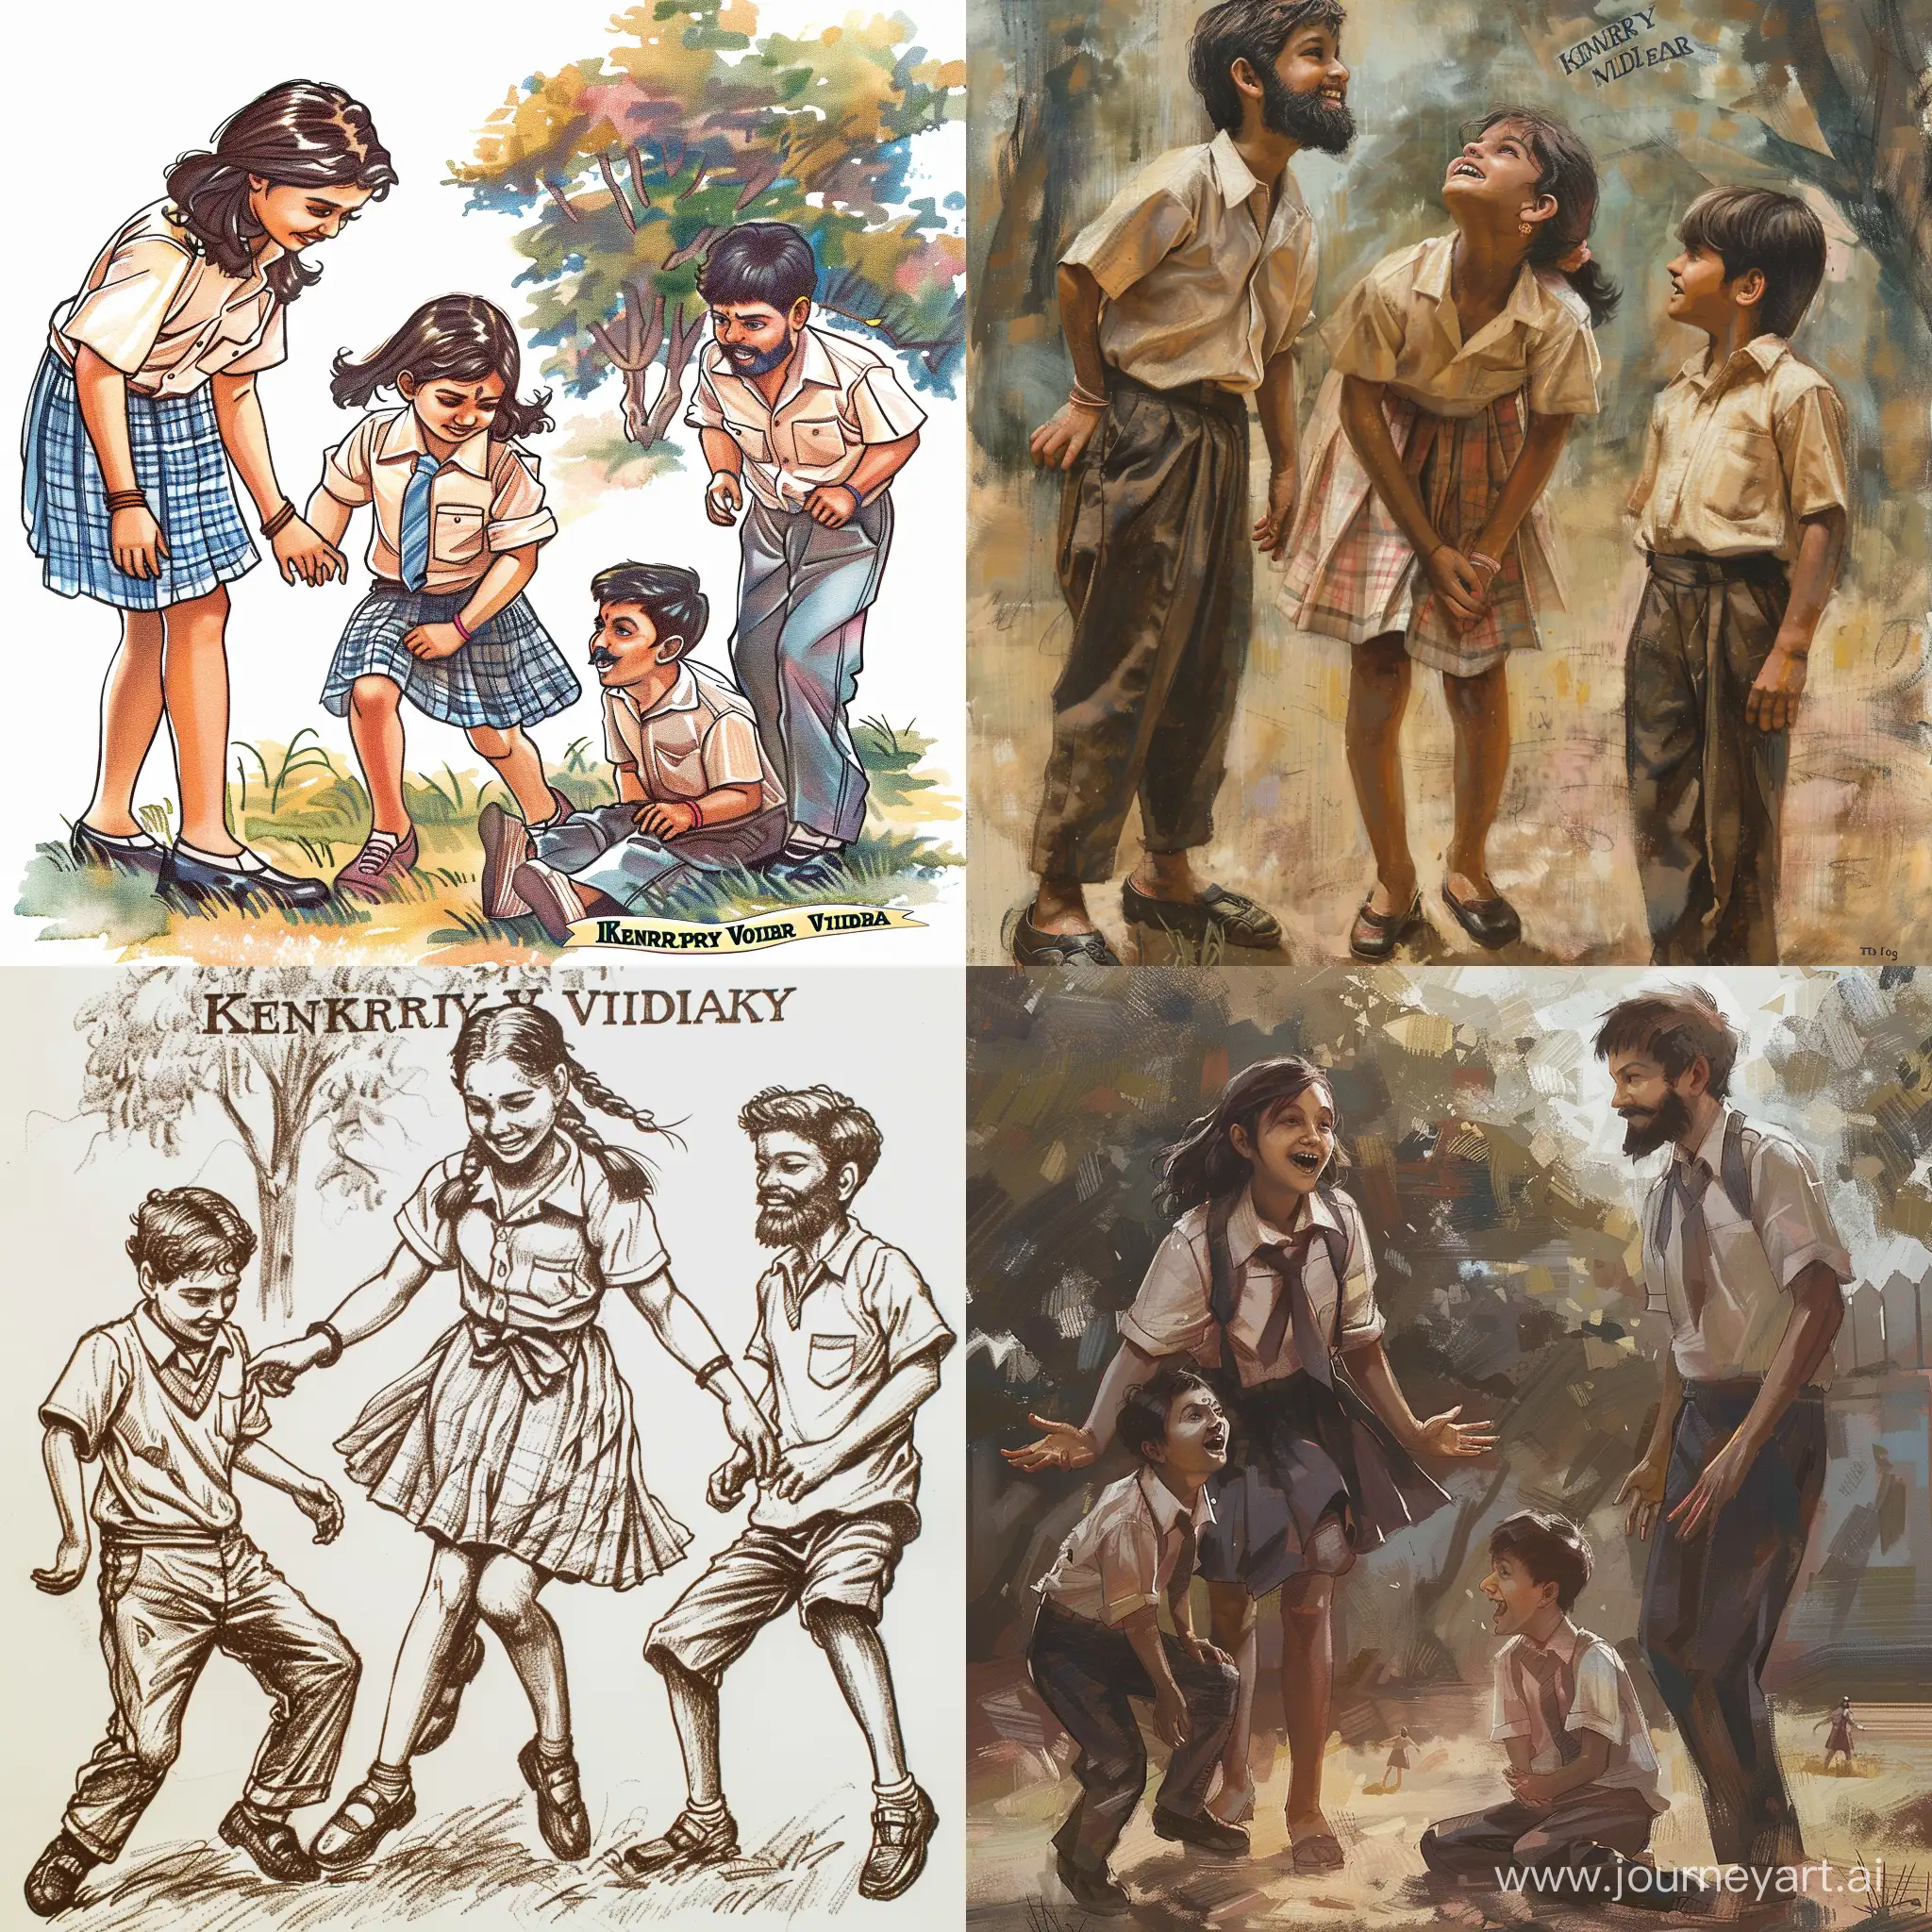 Indian-Schoolgirl-Playing-with-Two-Boys-in-Kendriya-Vidyalaya-Uniforms